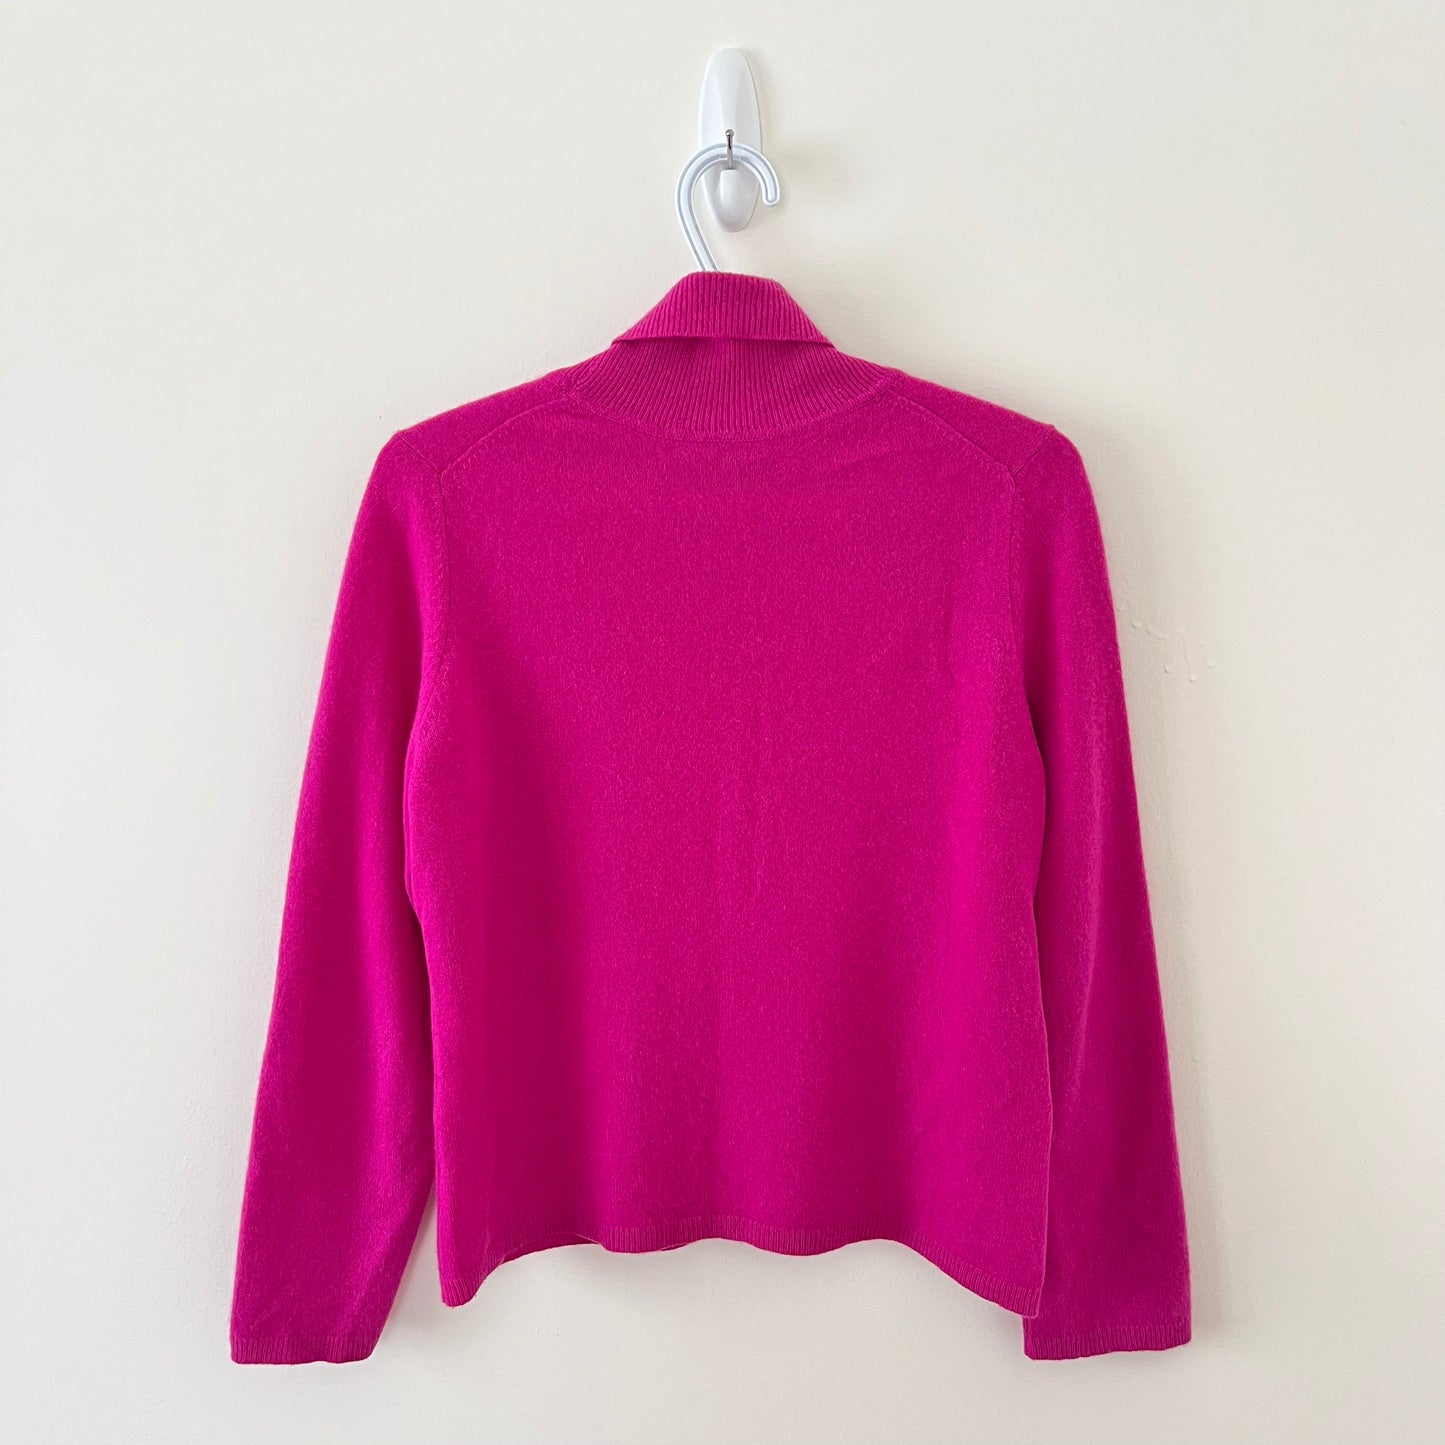 Fuschia Cashmere Sweater (S-M Petite)